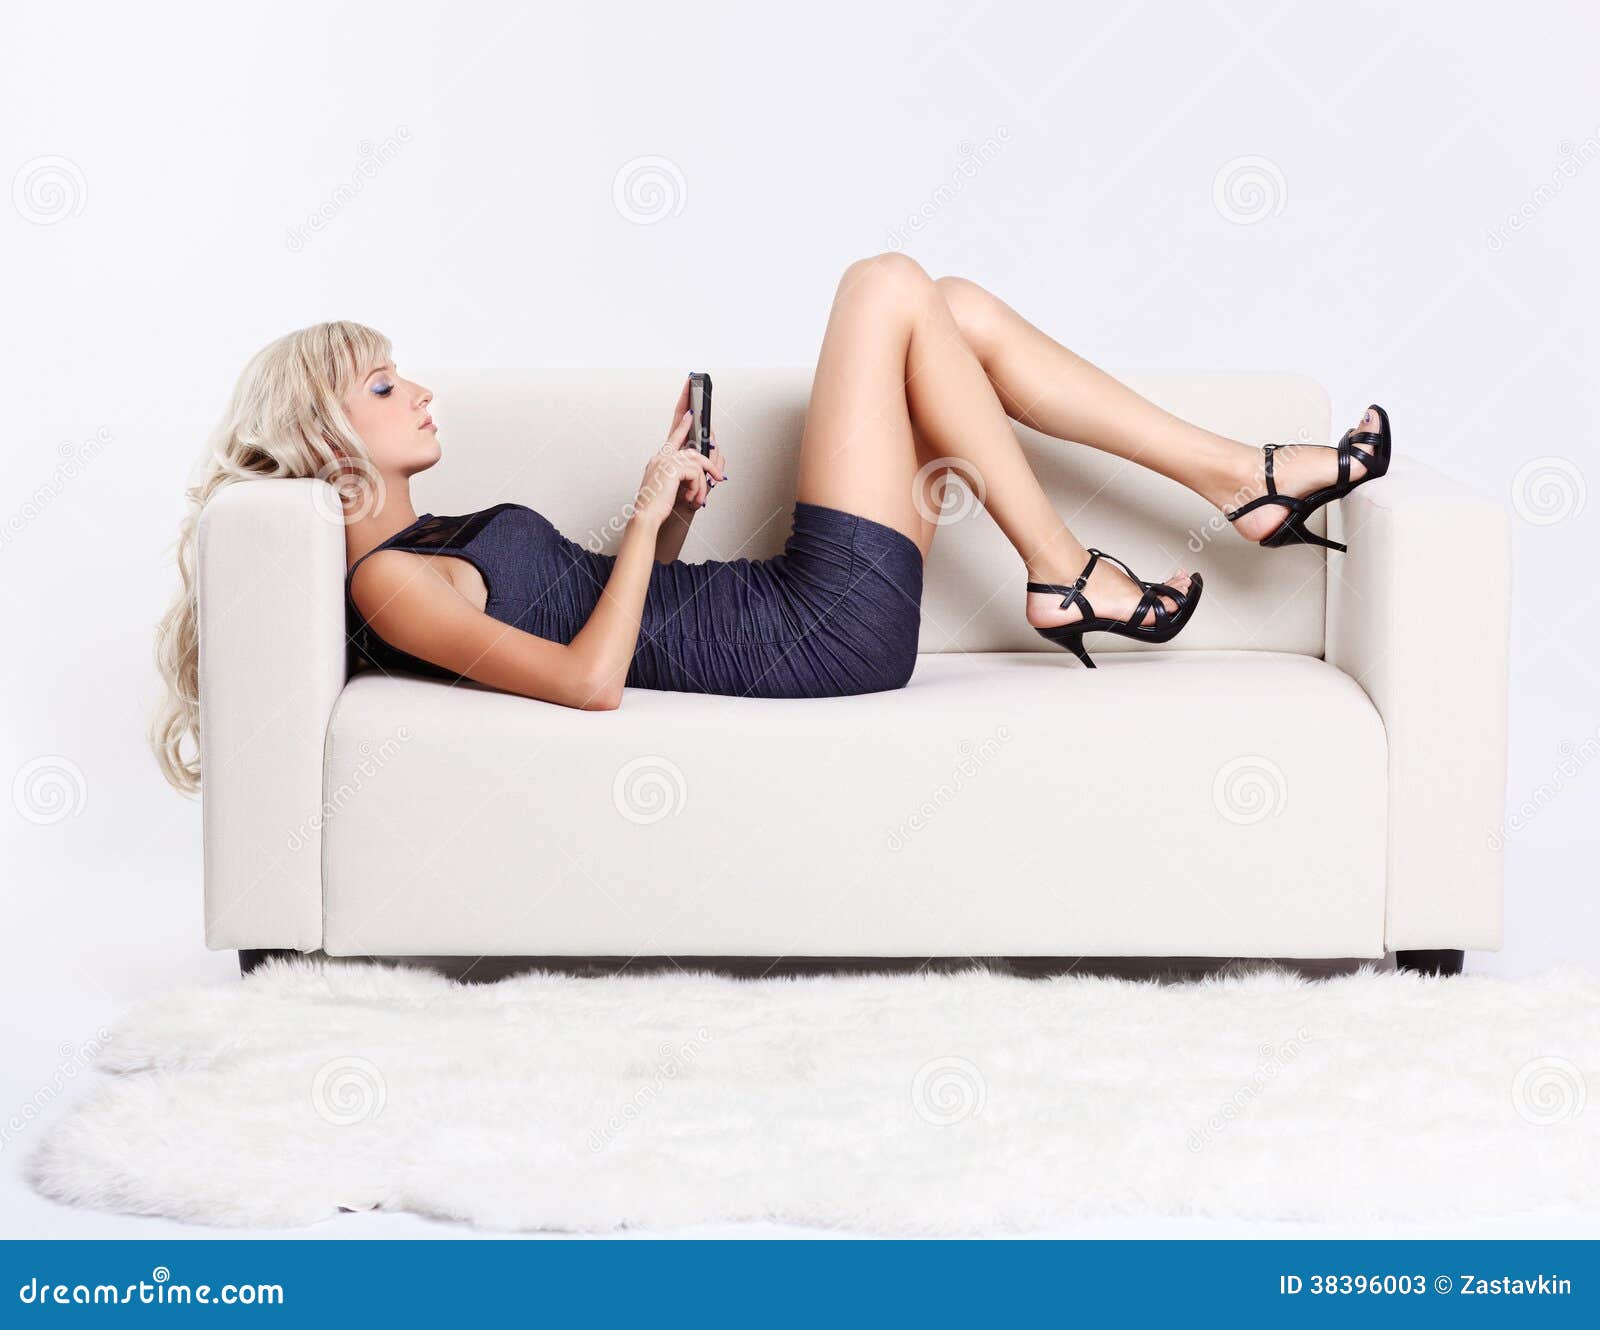 Тетке на диване. Девушка лежит на диване. Блондинка девушка на диване лежит. Девушка со смартфоном на диване. Девушка полулежа на диване.